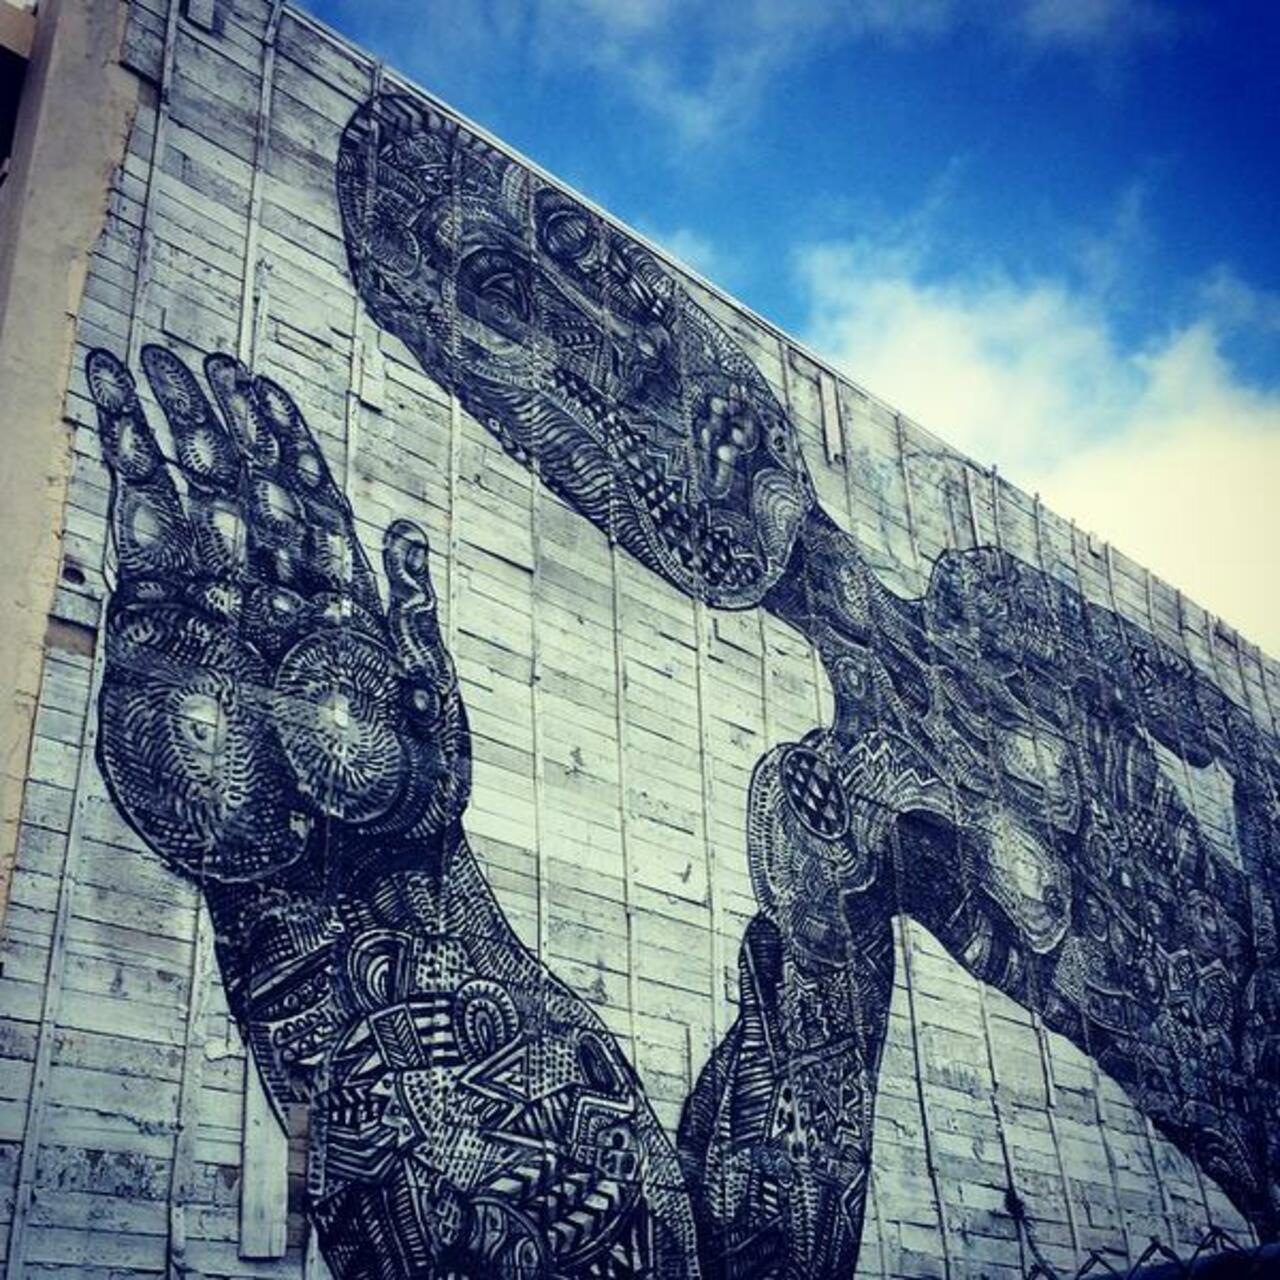 #StreetArt via @AlmostT_Blog SAN FRANCISCO
Gorgeous work via @circumjacent  #graffiti  http://t.co/PNaIBH3O7e” http://ow.ly/NGoYV